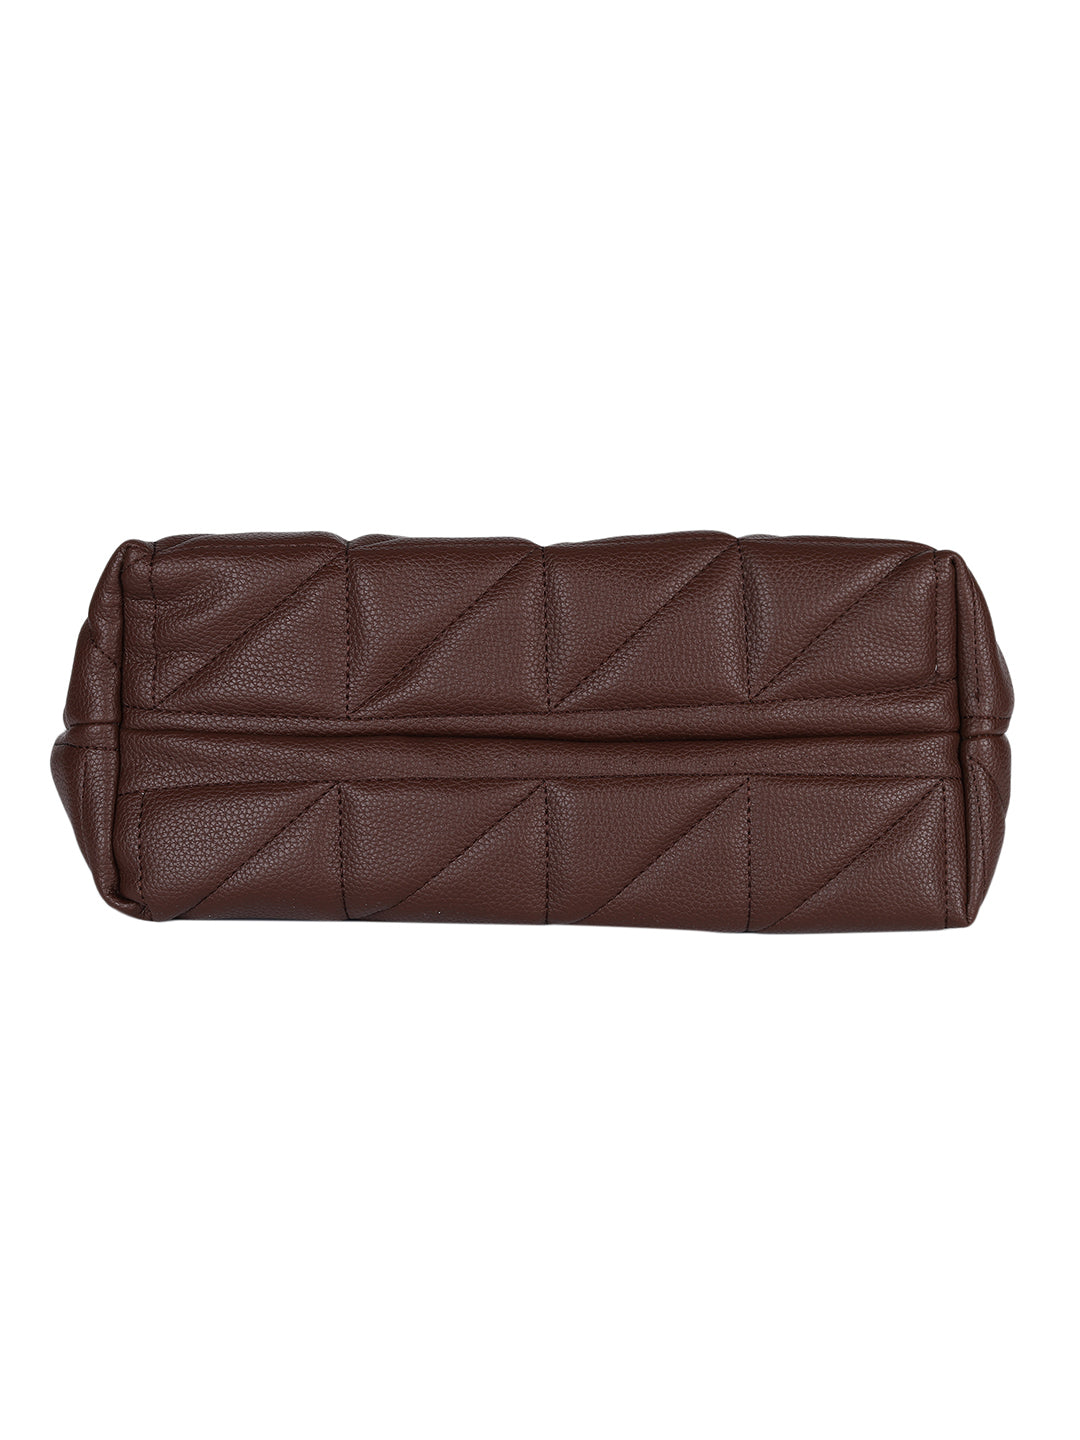 MINI WESST Brown Solid Tote Bag(MWTB099BR)